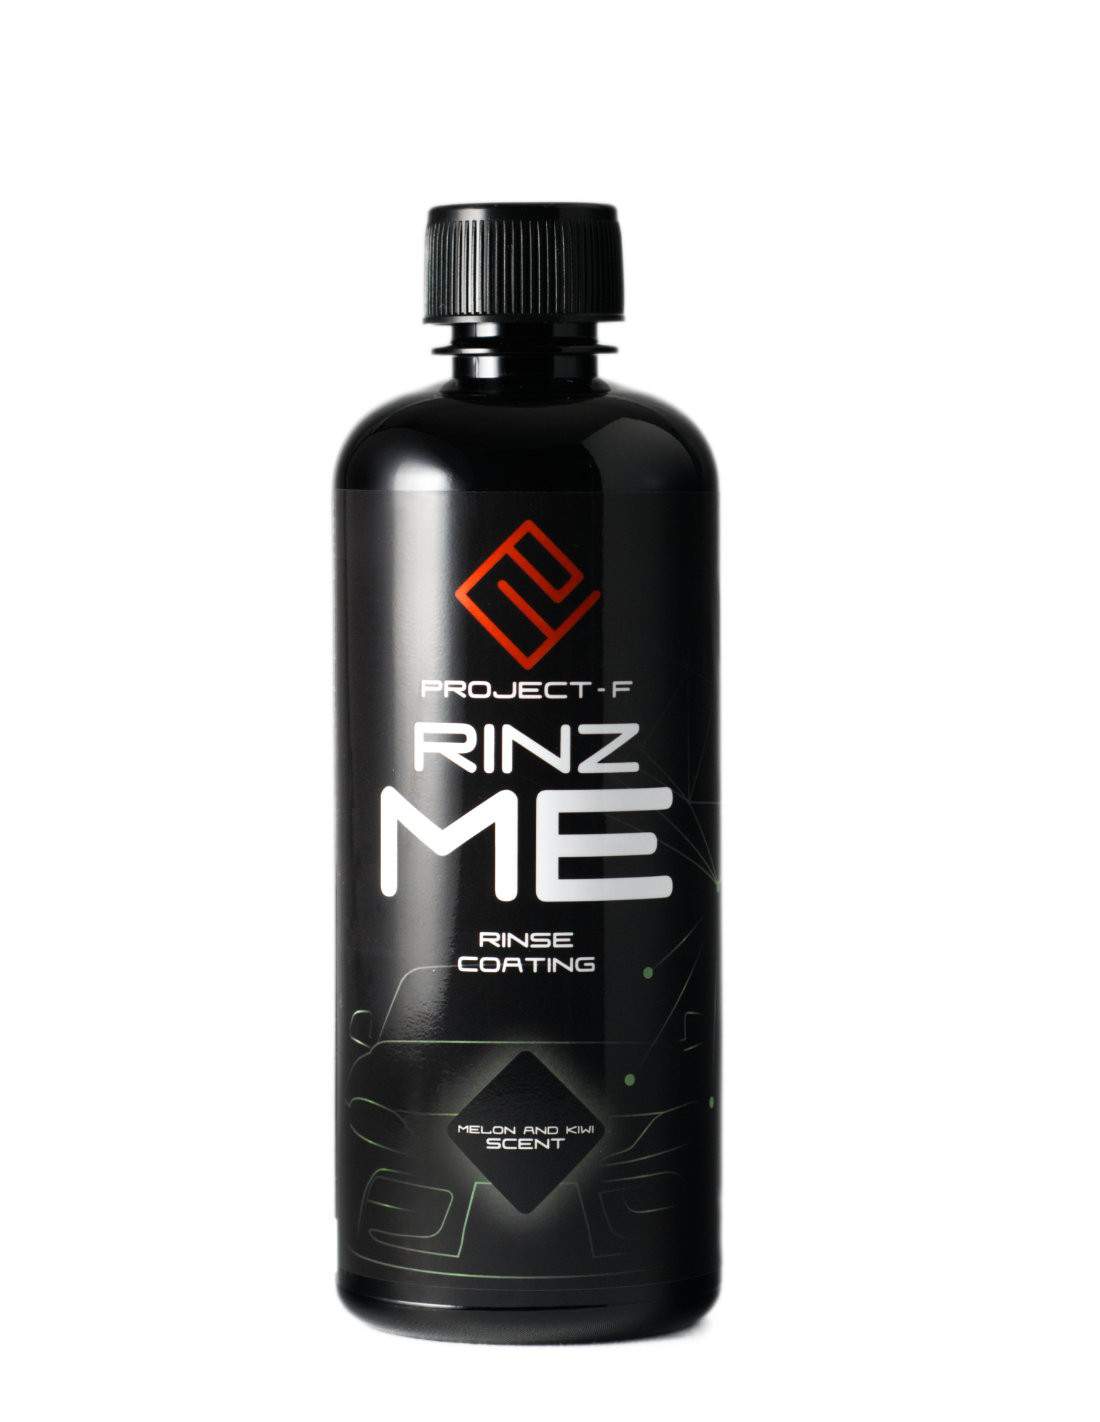 PROJECT-F - RinzME - Rinse Coating(új)